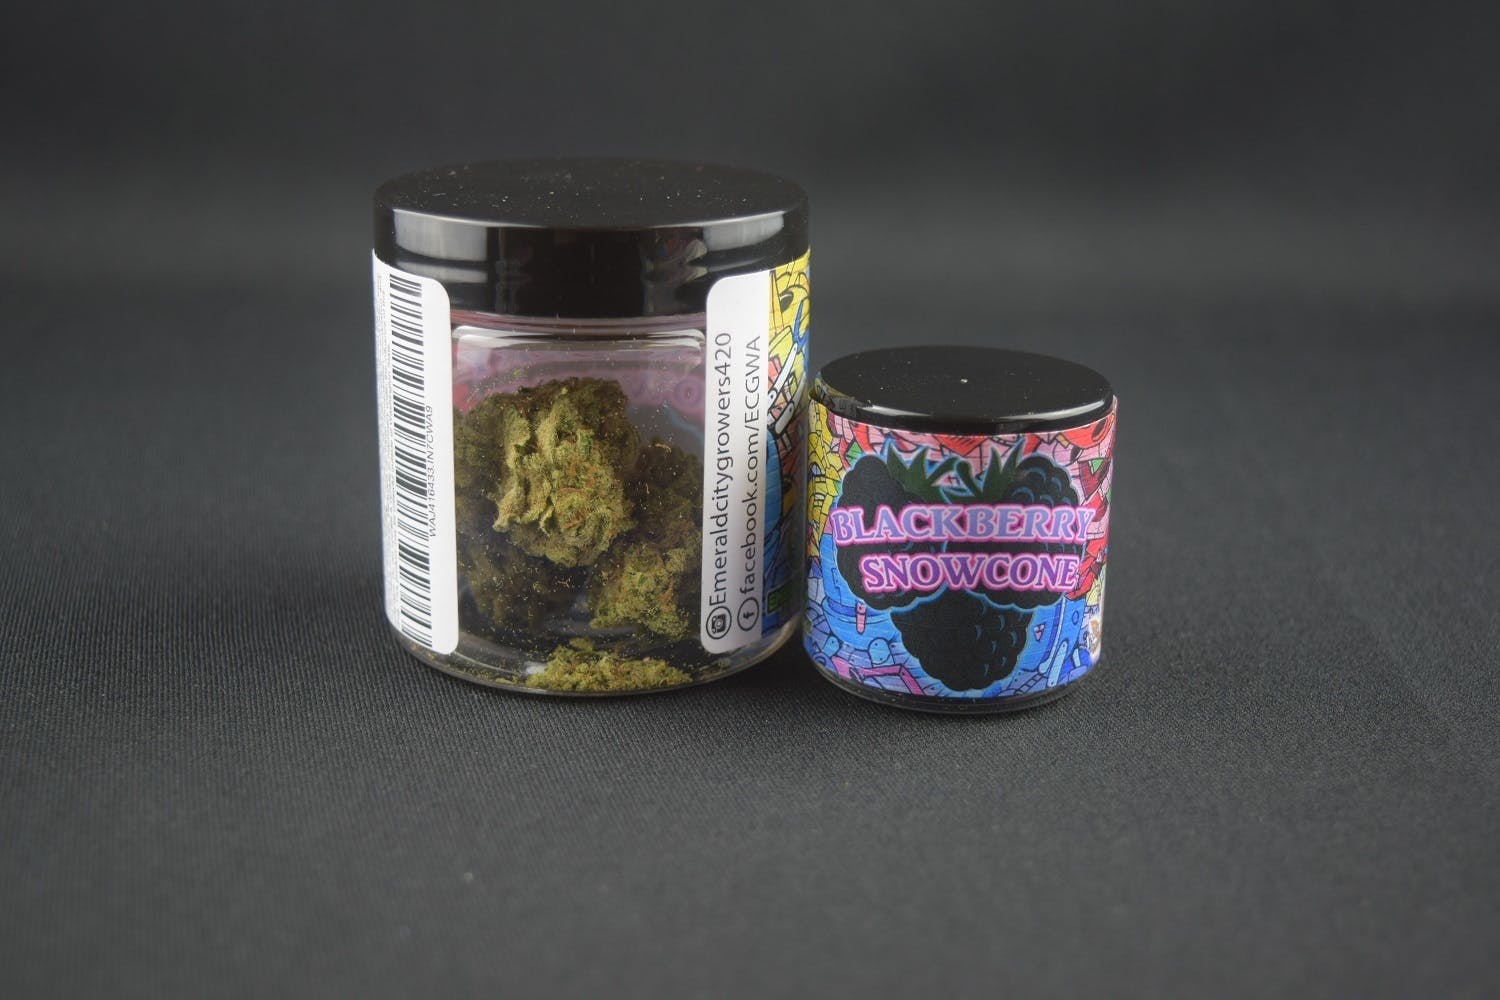 marijuana-dispensaries-freedom-market-ilwaco-recreational-in-ilwaco-blackberry-snow-cone-emerald-city-growers